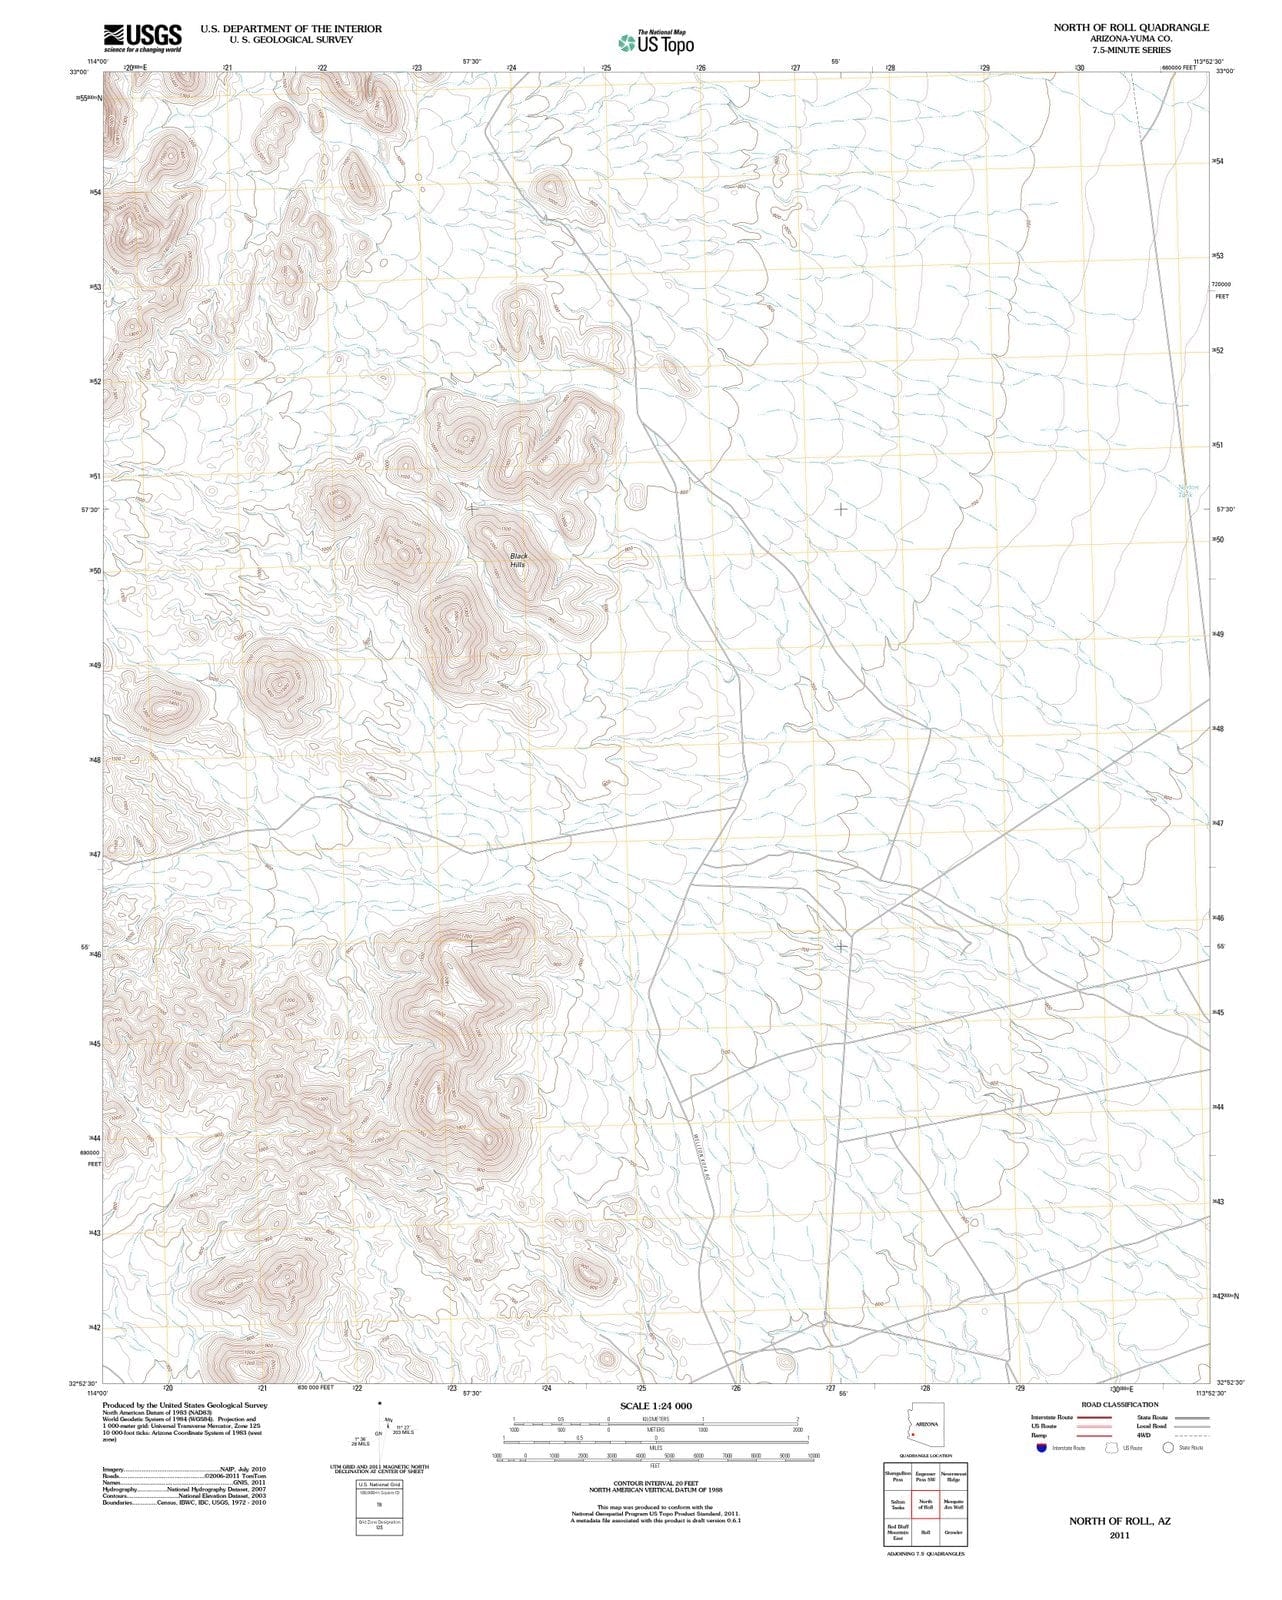 2011 North of Roll, AZ - Arizona - USGS Topographic Map